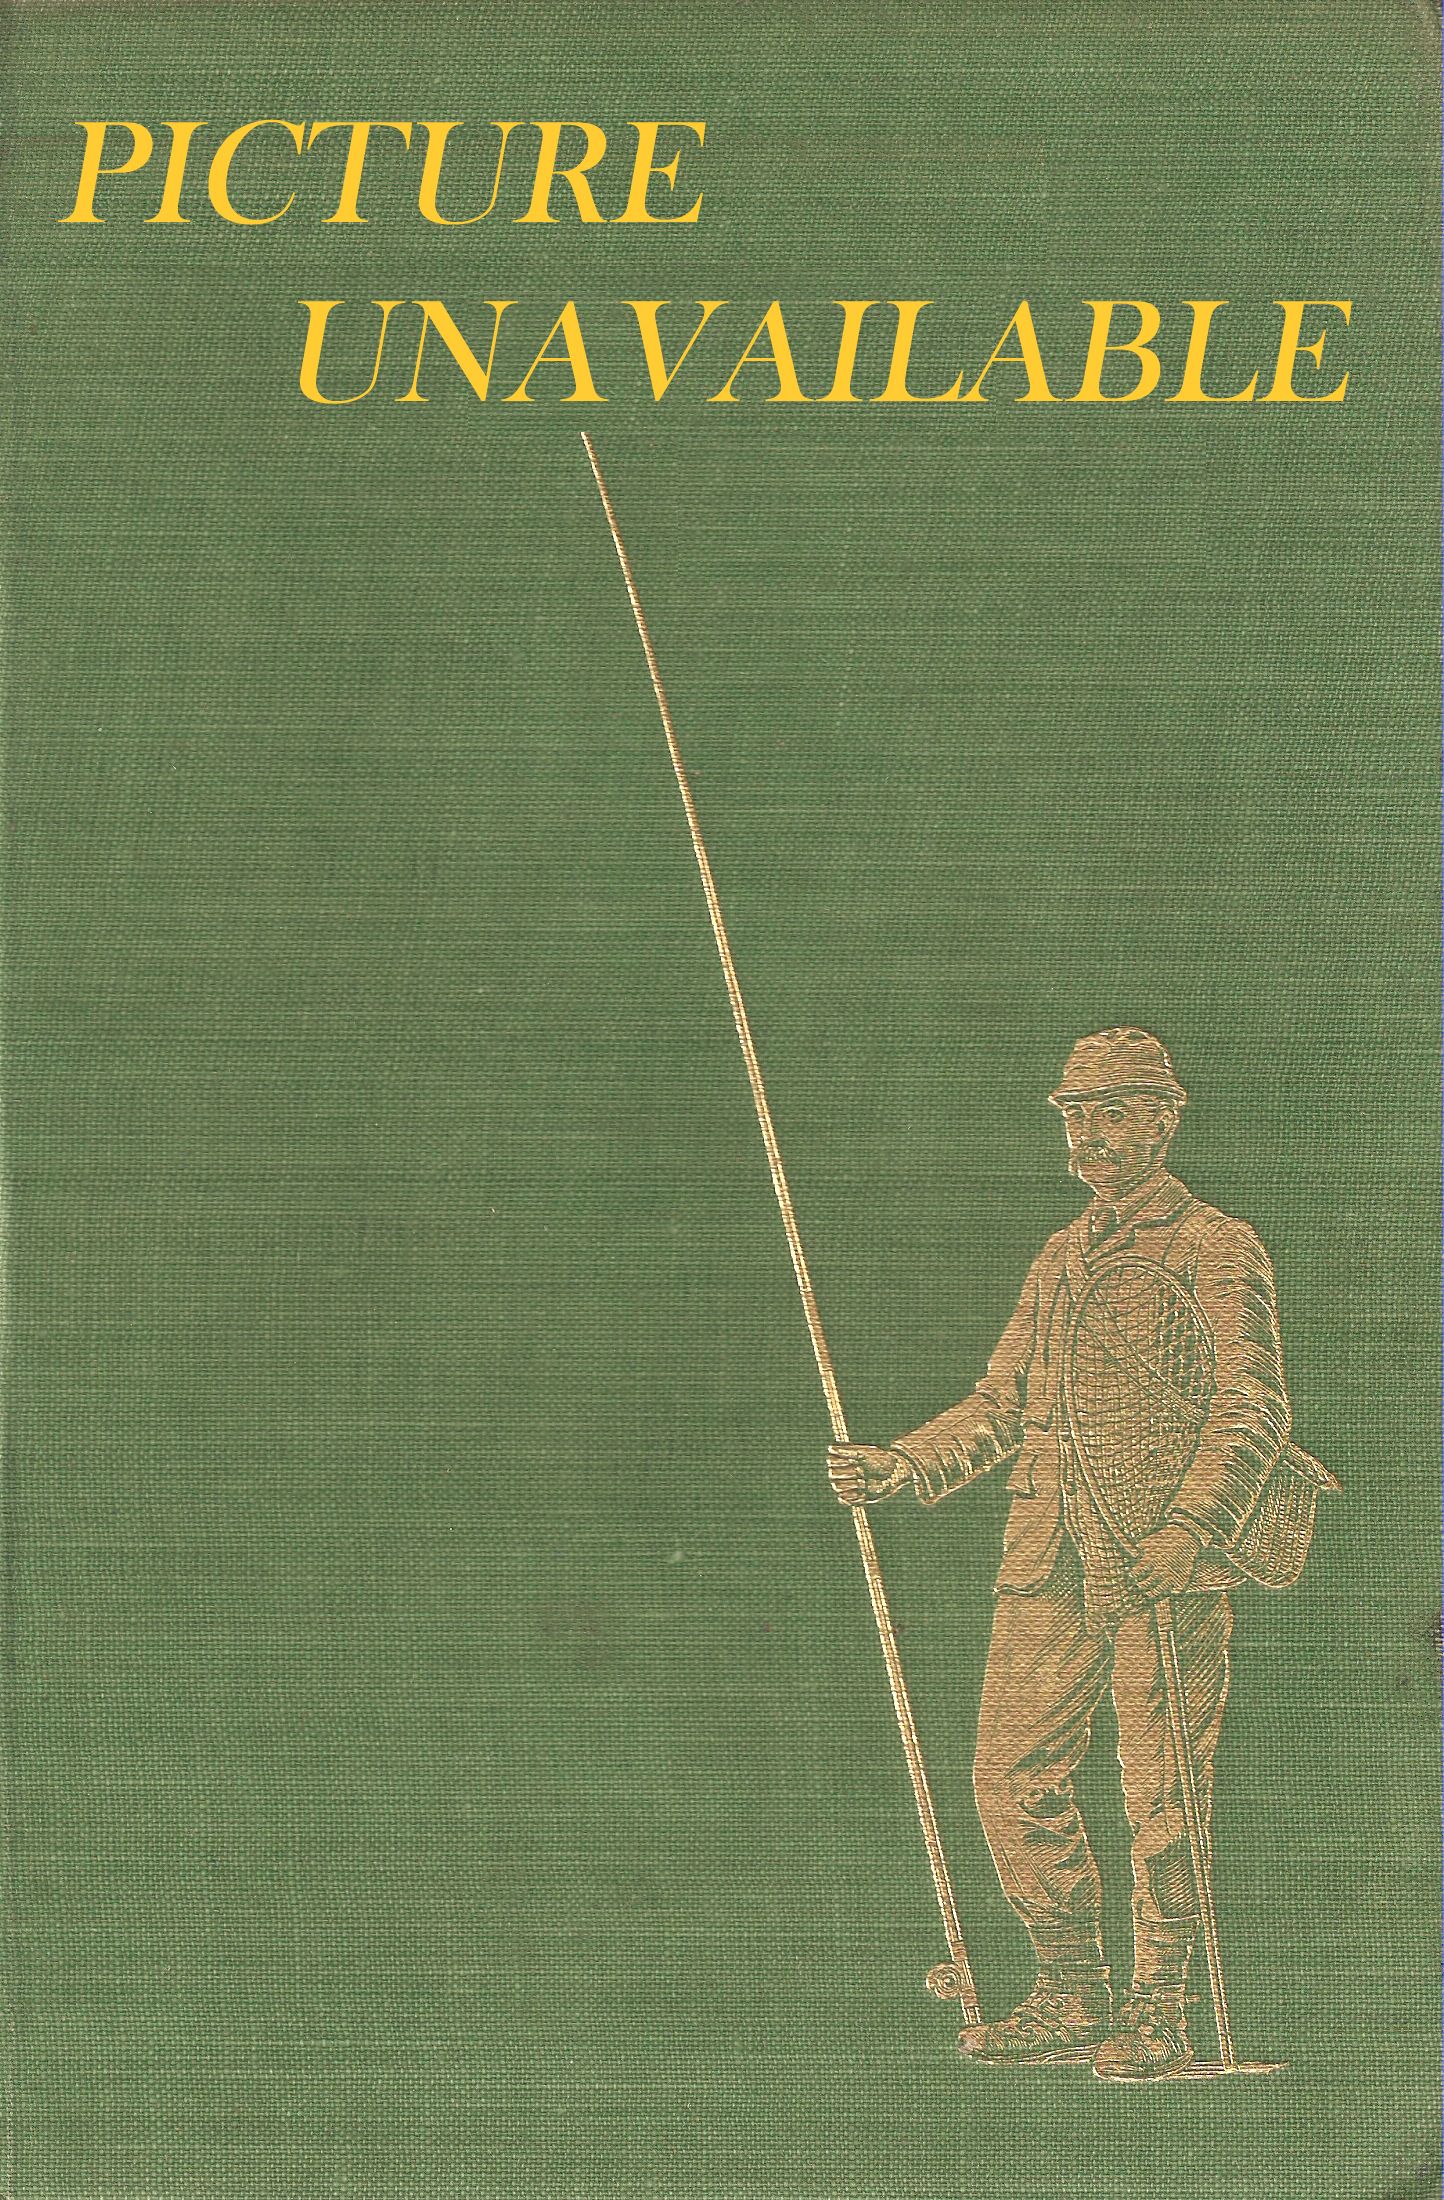 CREEL: A FISHING MAGAZINE. Volume 1, number 8. February 1964.